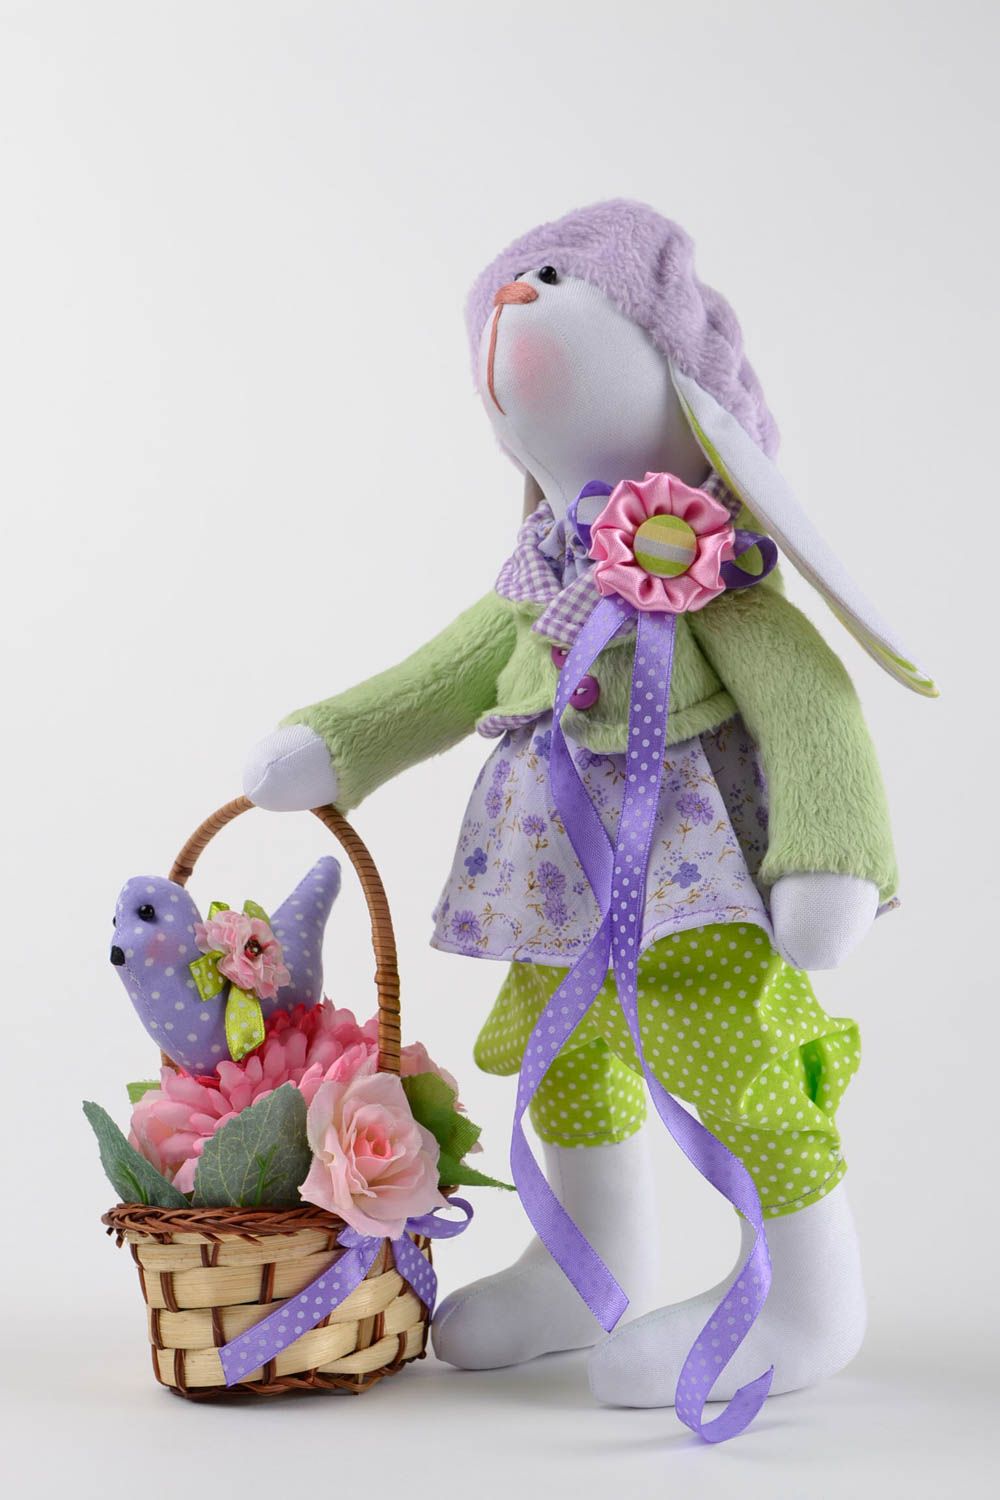 Handmade interior textile doll designer rag bunny toy present for children photo 1